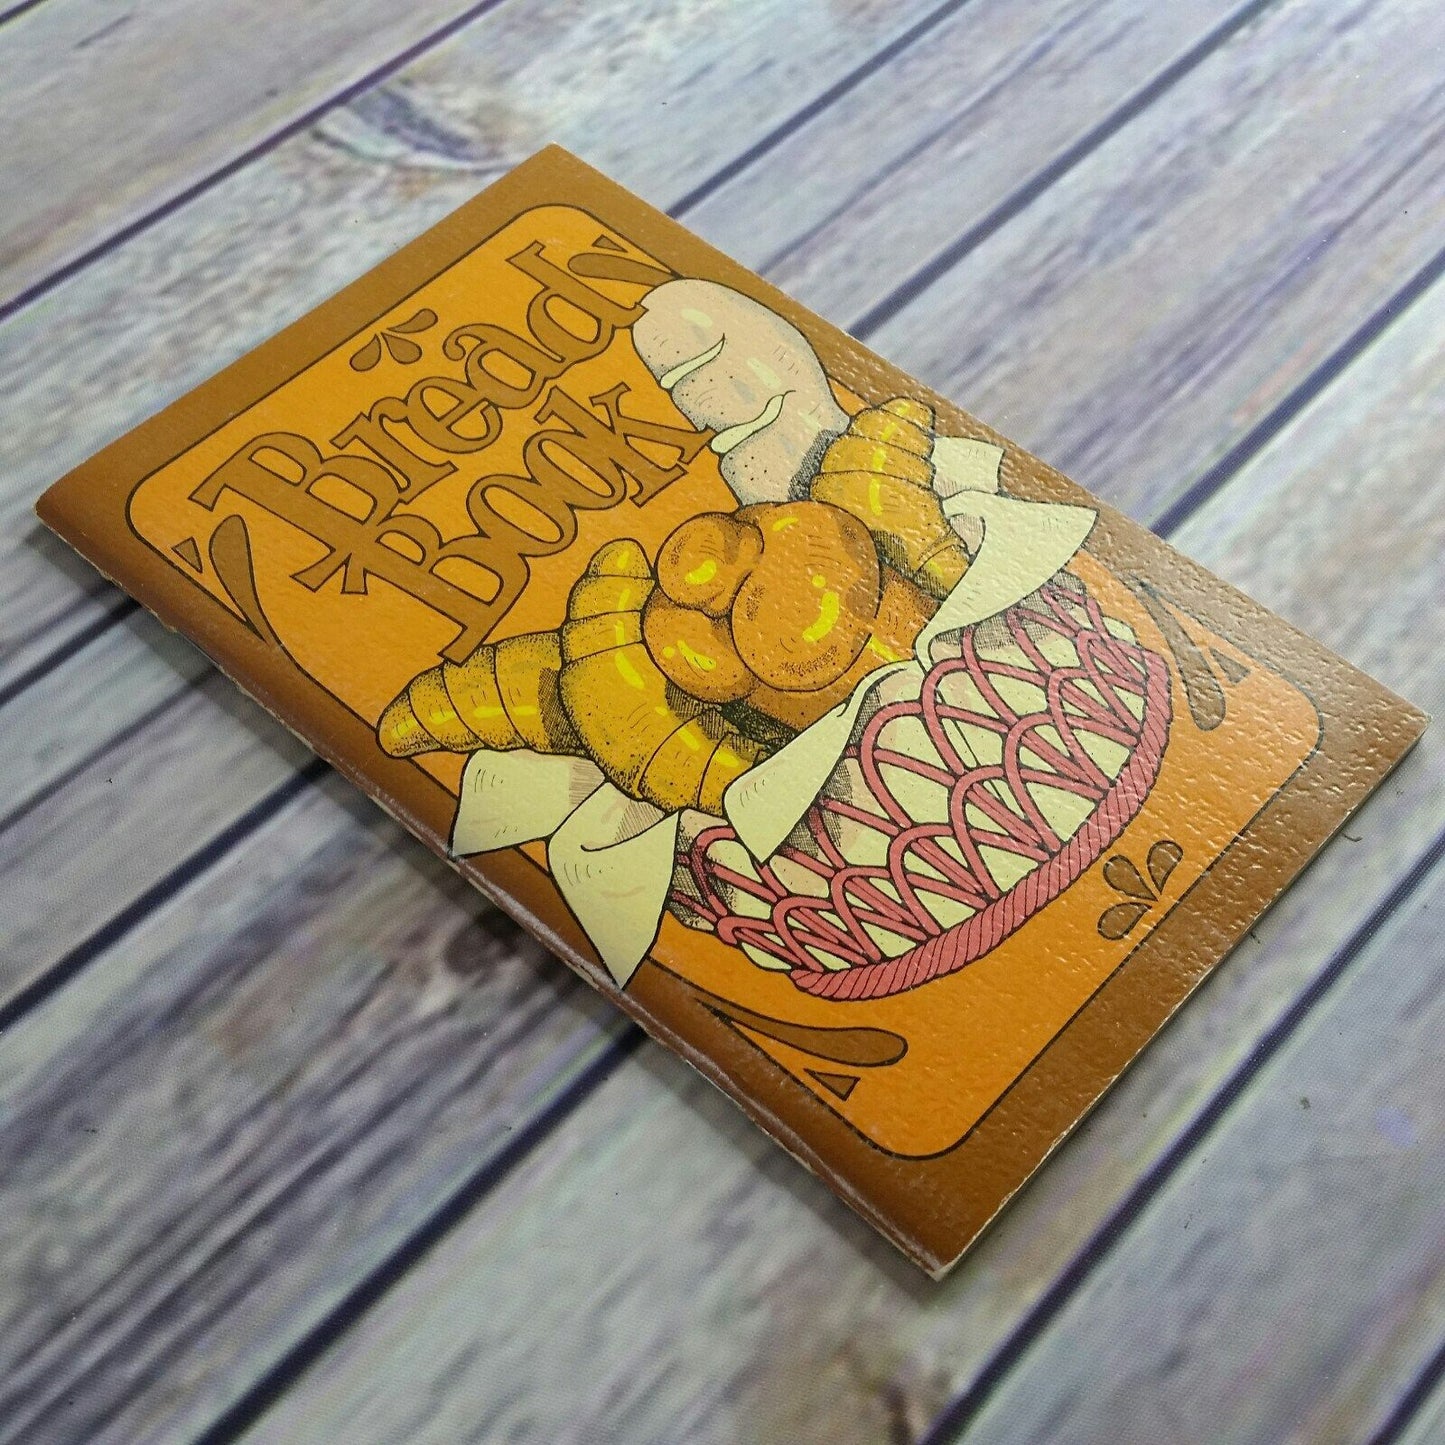 Vintage Cookbook Bread Book Susan Wright 1972 Potpourri Press B. Penny Paperback Booklet Bread Recipes